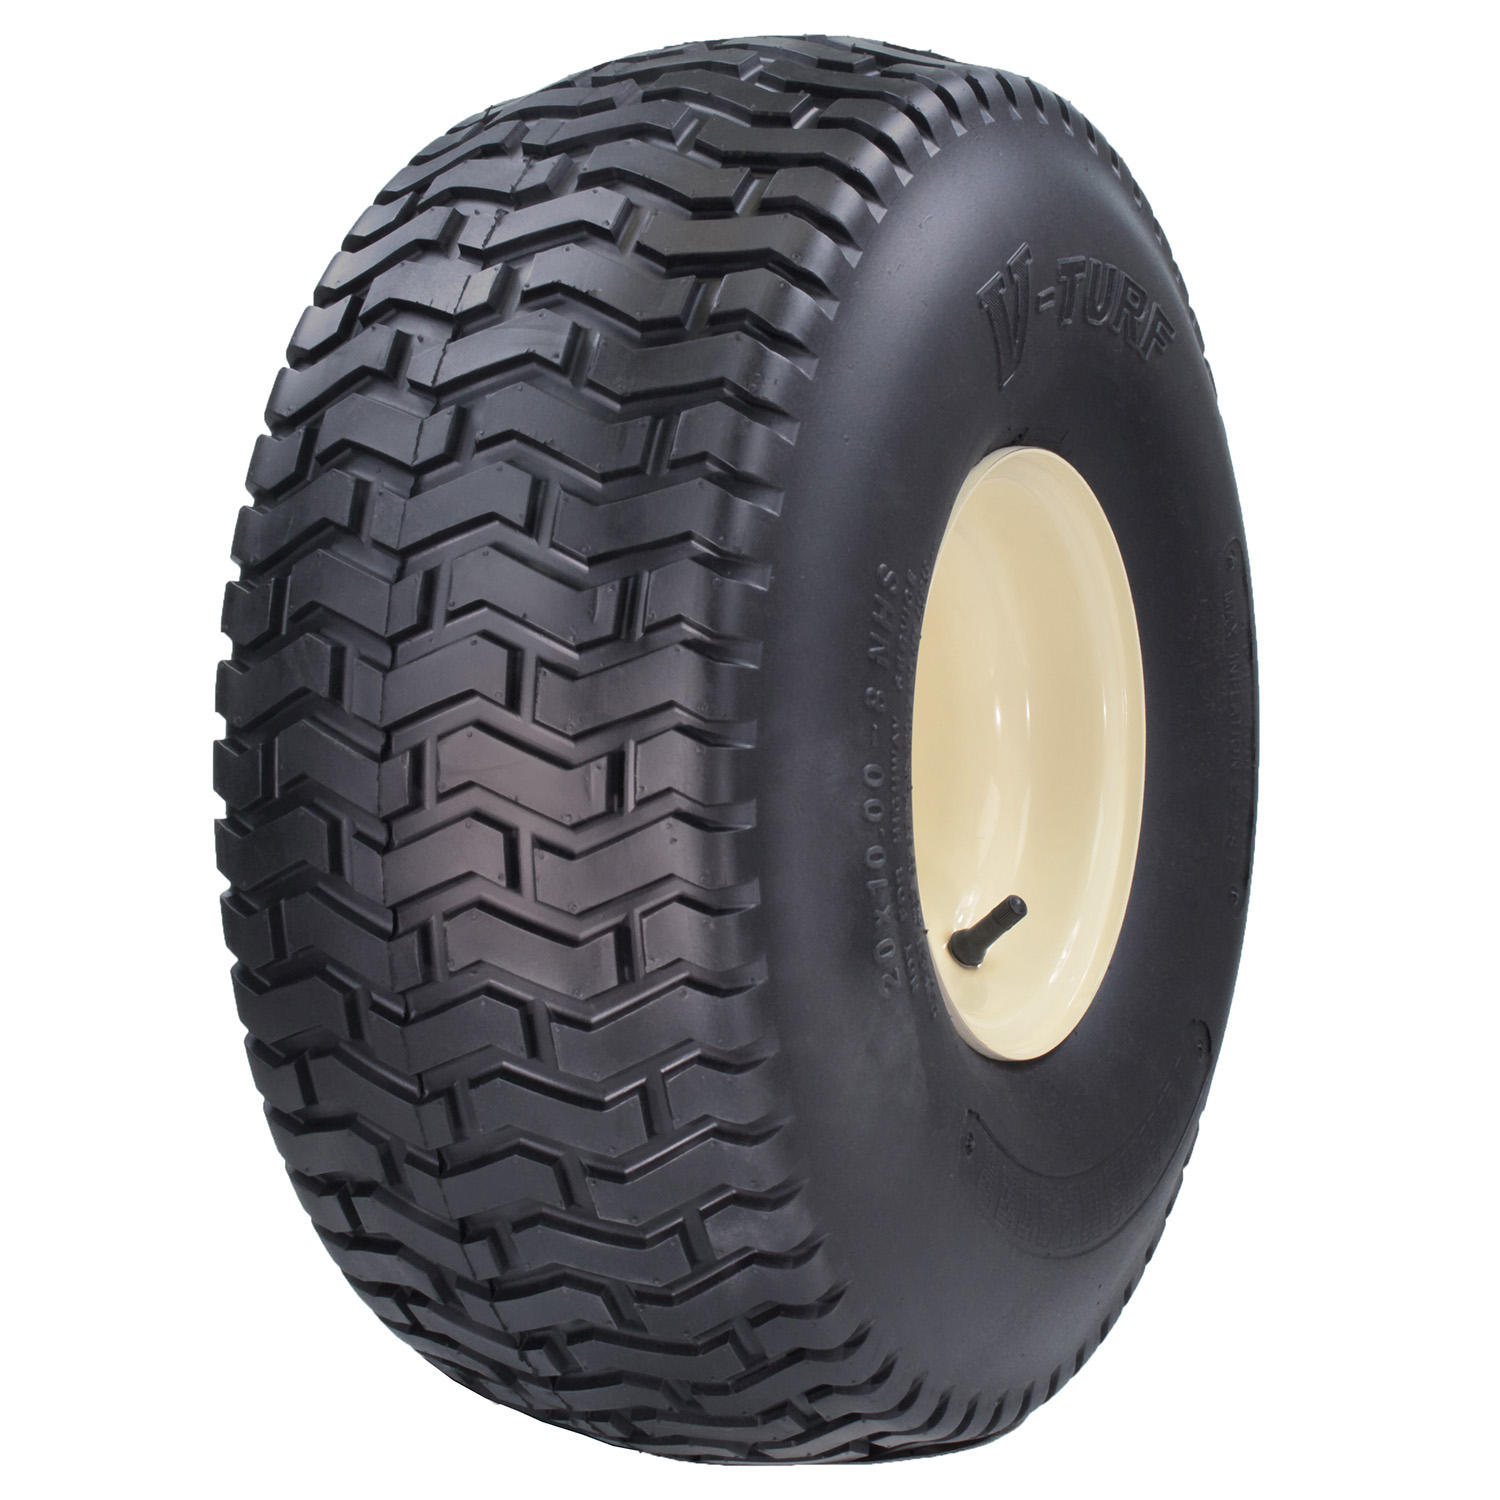 Greenball Soft Turf - 18X9.50-8 Lawn & Garden Tire